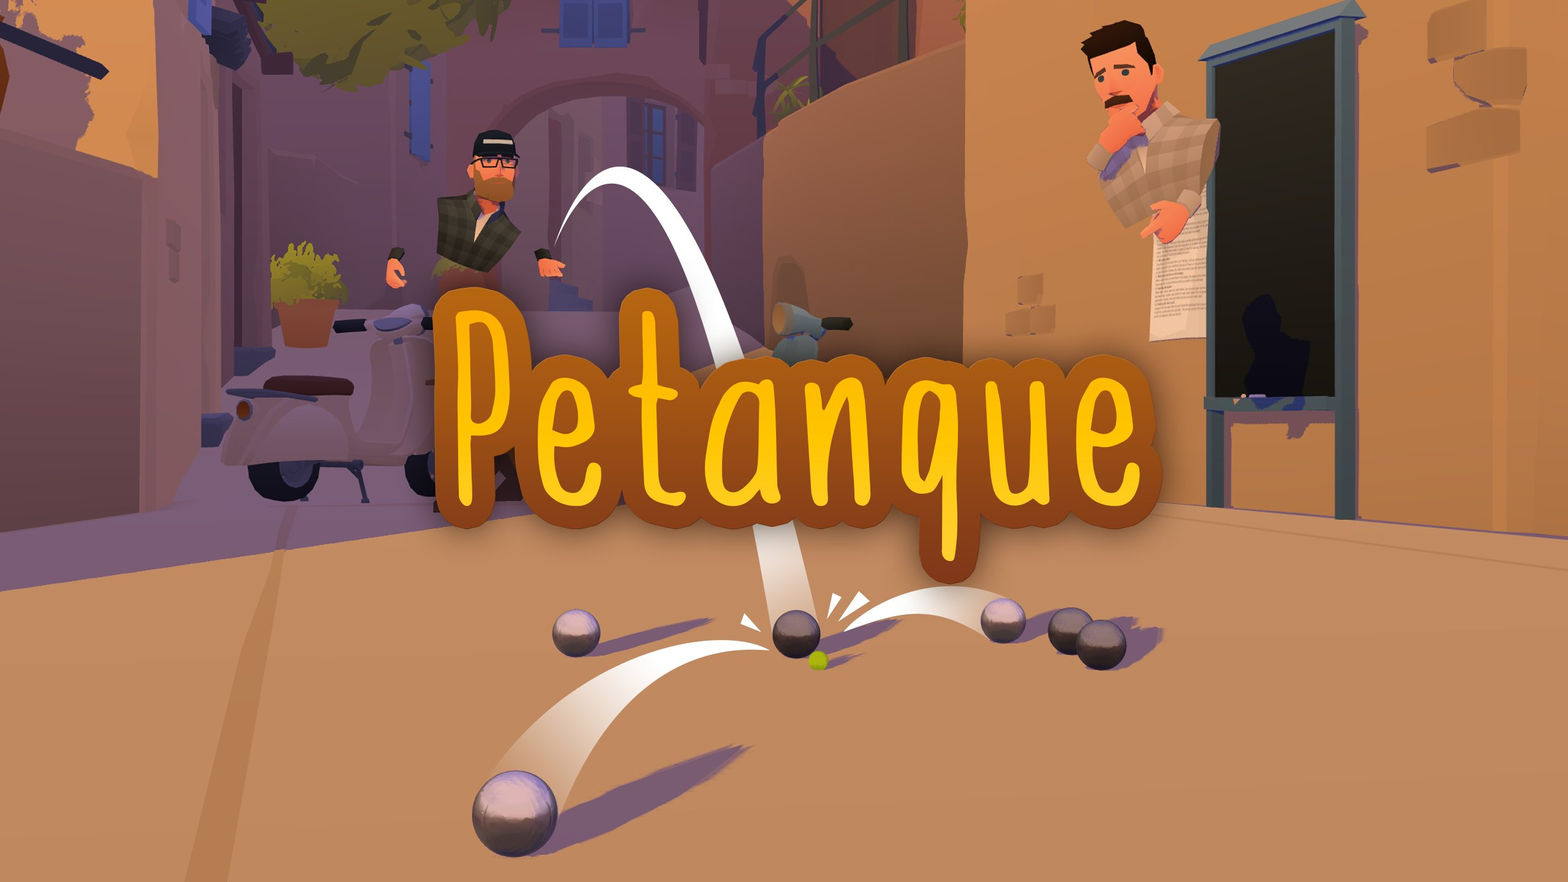 Petanque